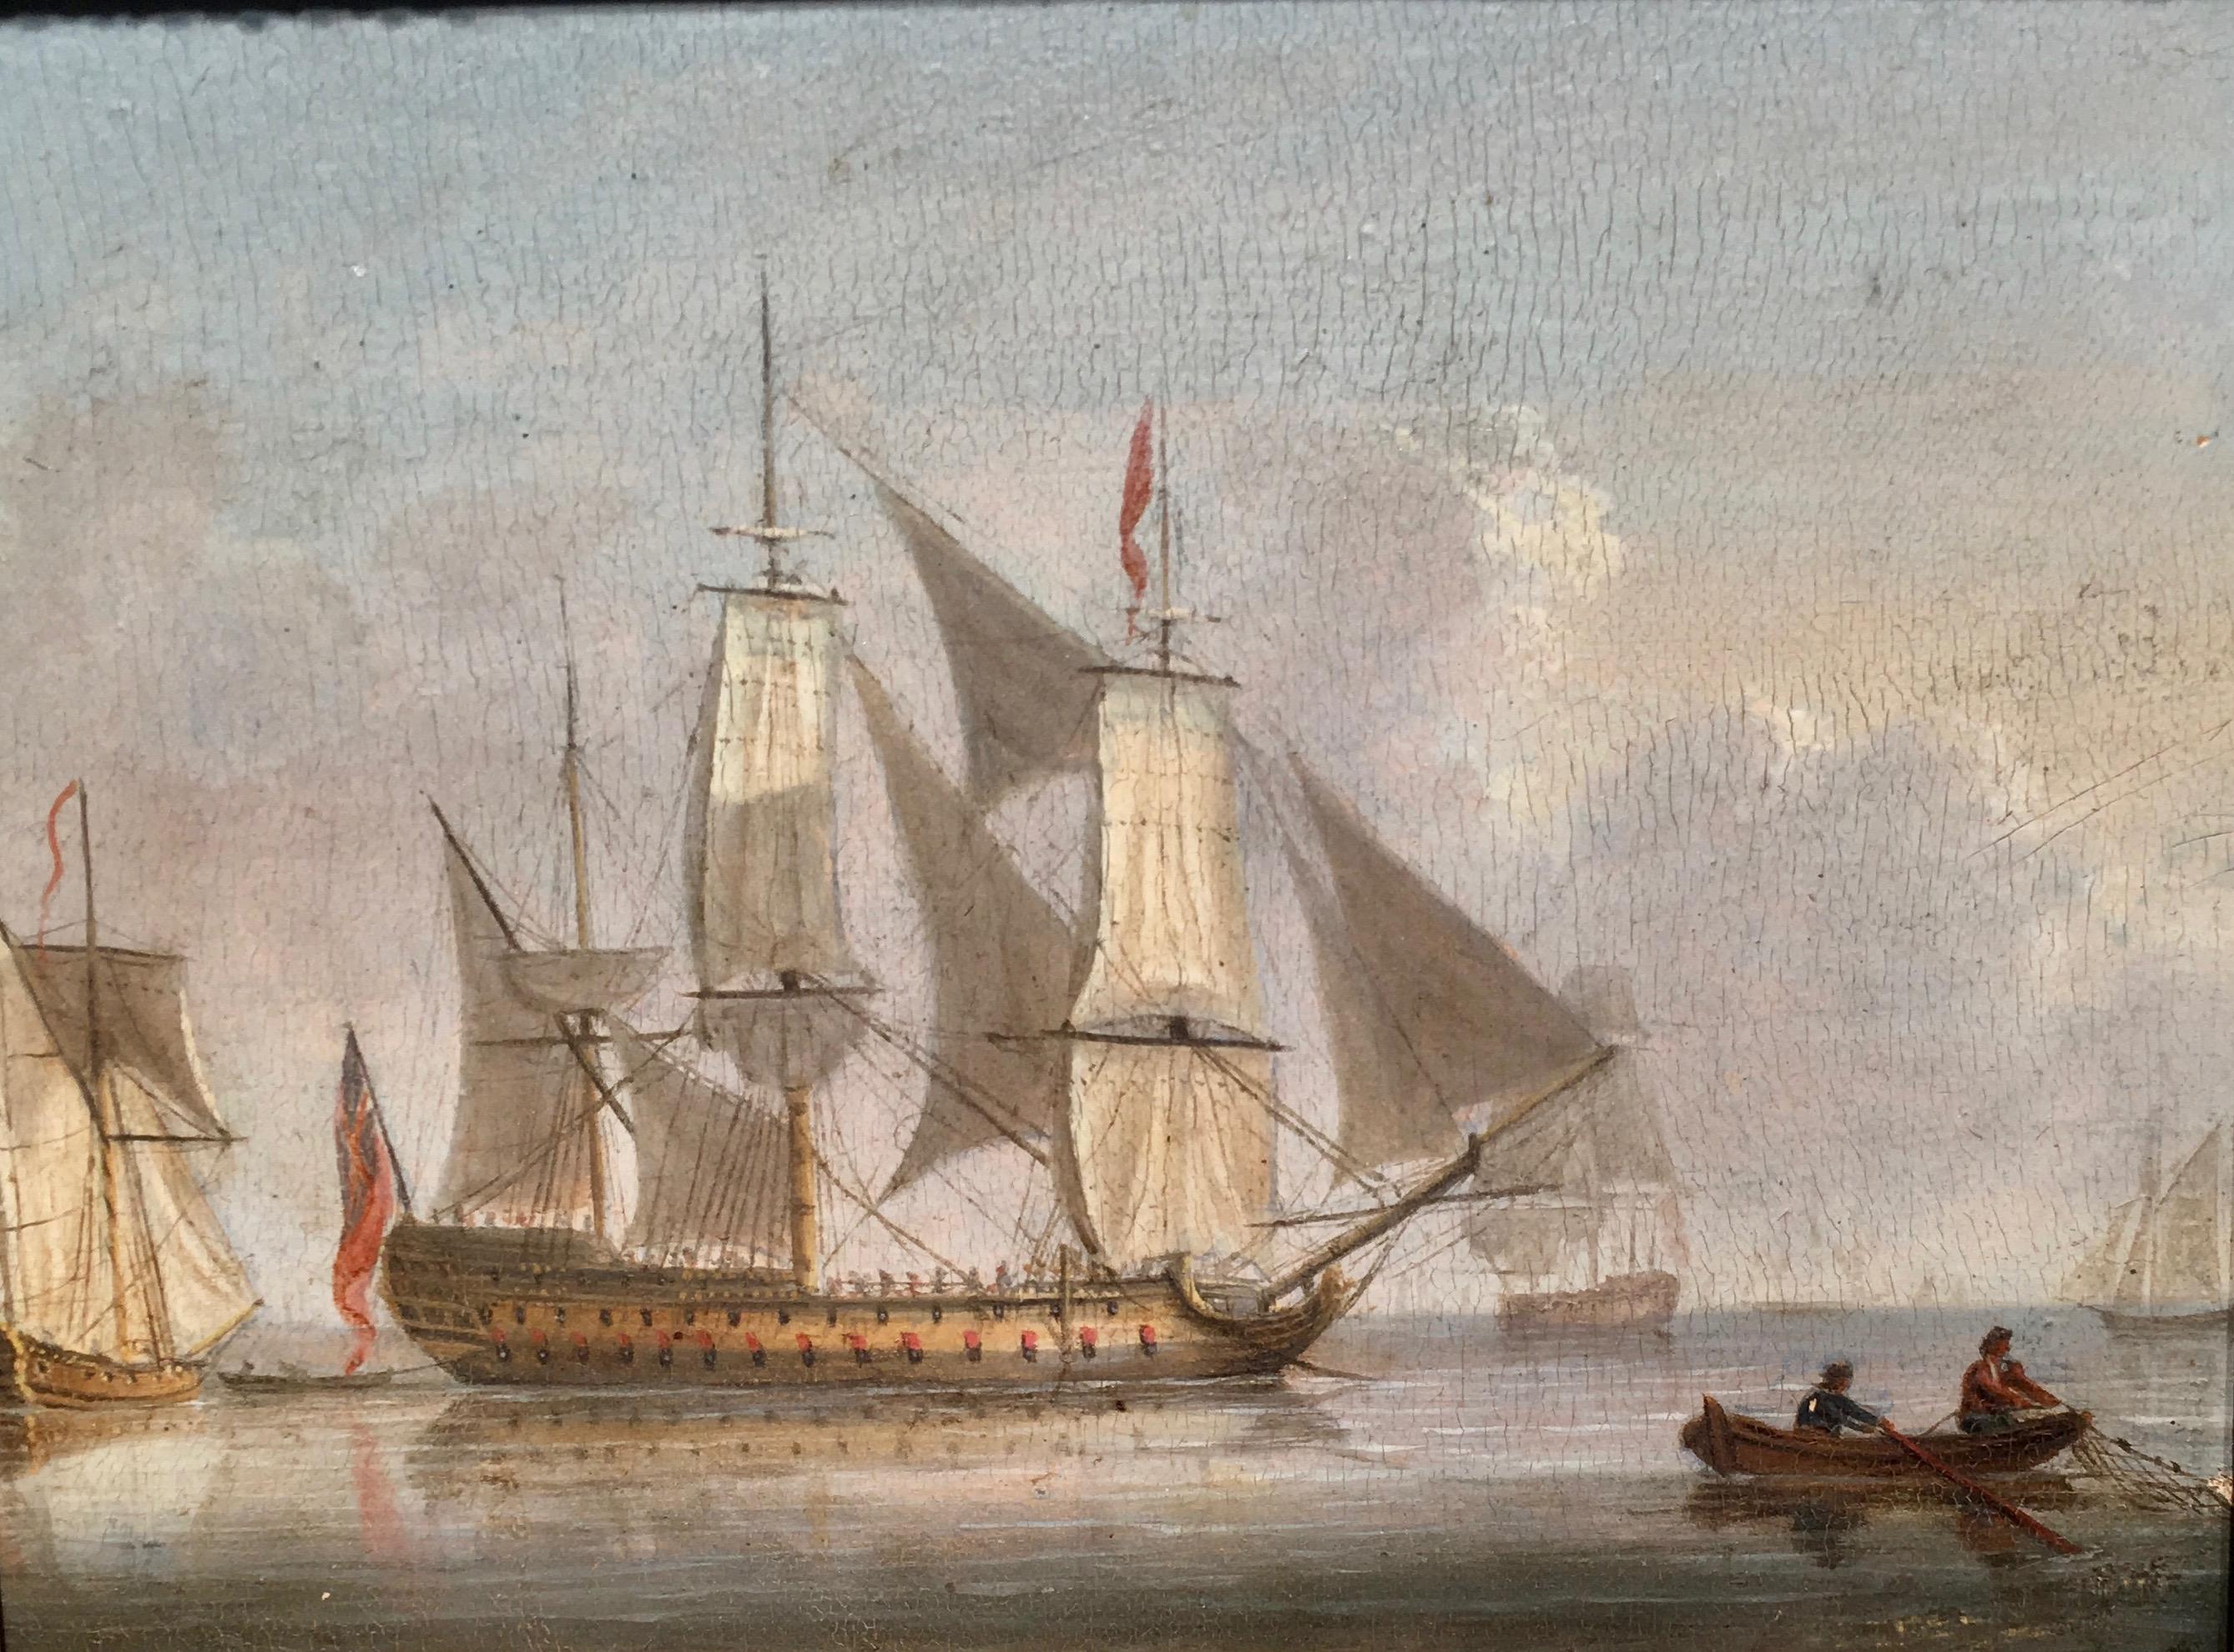 Early 19th century Georgian or Regency English warship off the English coast   - Painting by Thomas Luny